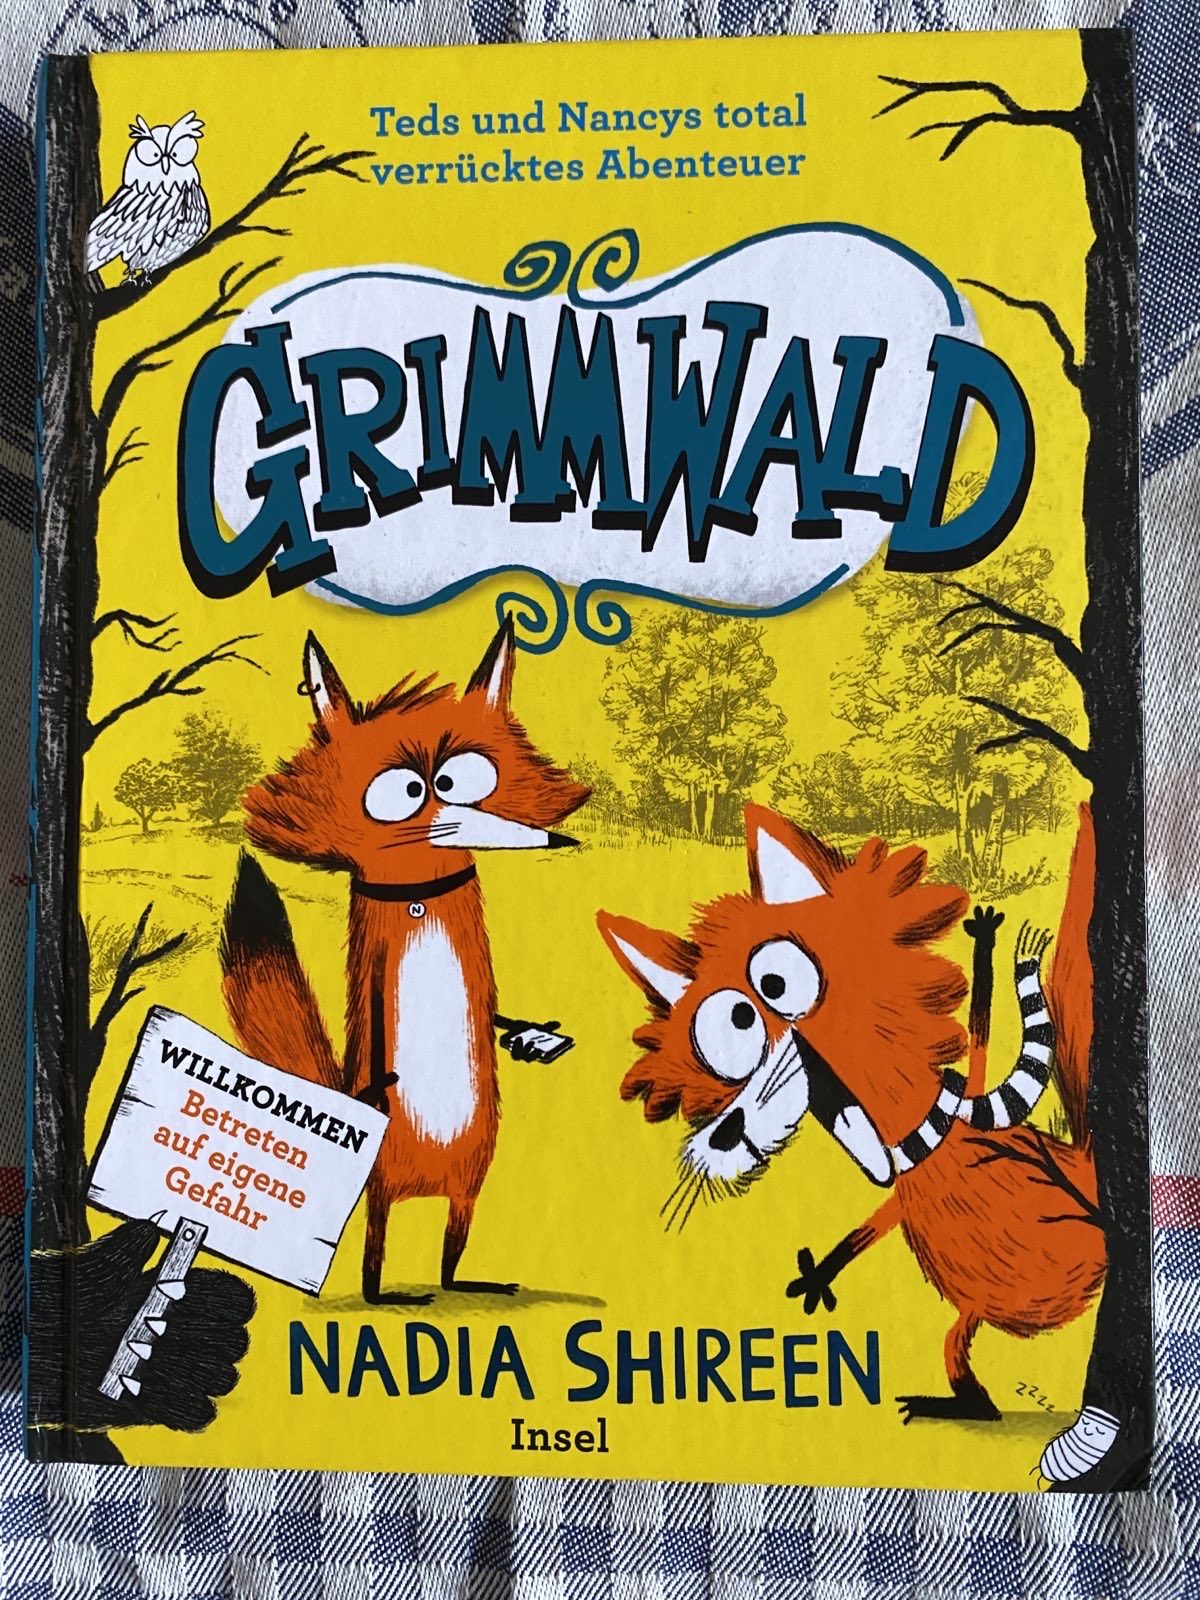 Teds und Nancys total verrücktes Abenteuer – Grimmwald